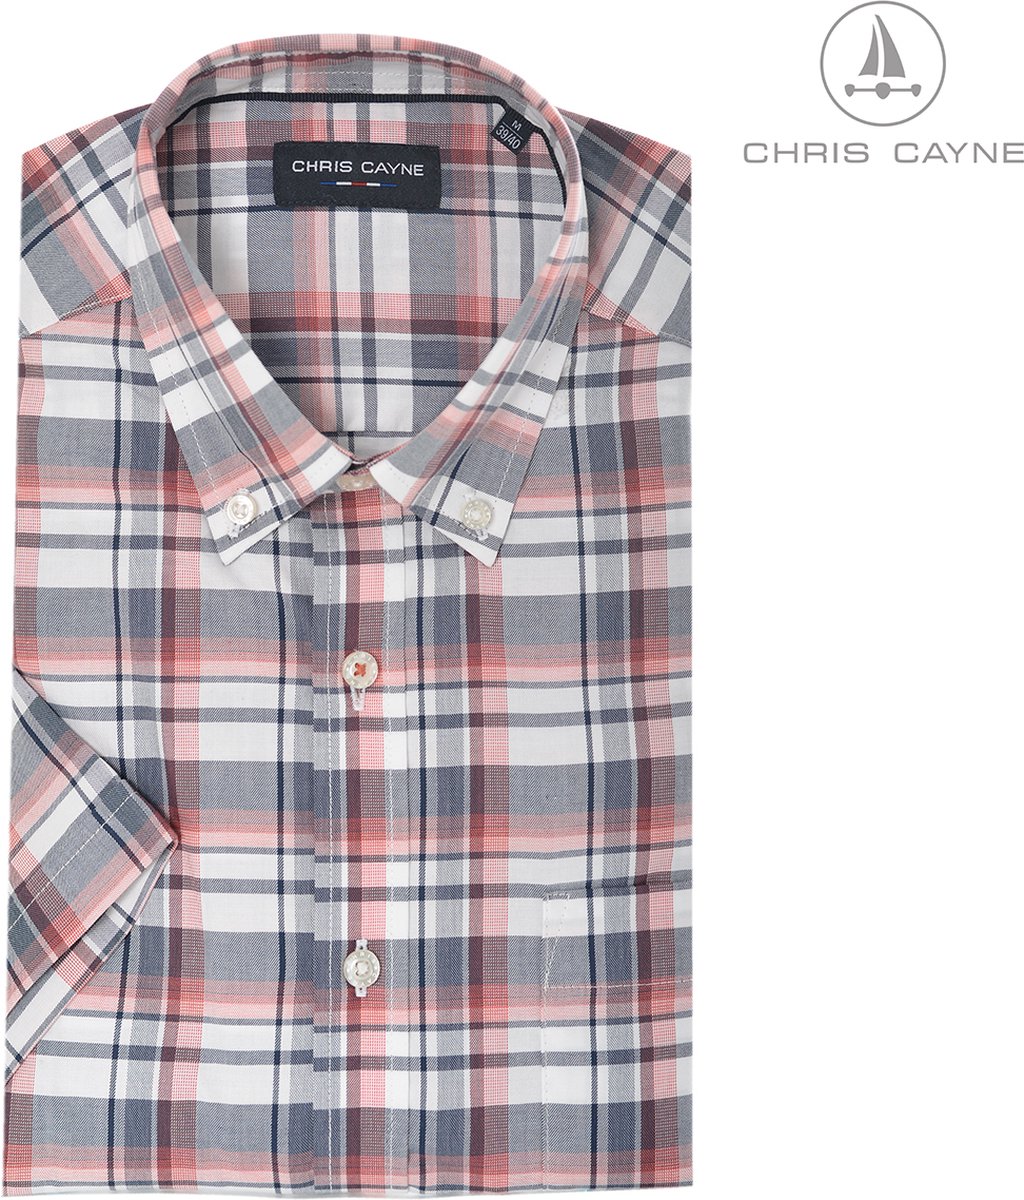 Chris Cayne heren blouse - overhemd 2210 wit/roze/grijs ruit - KM - maat M